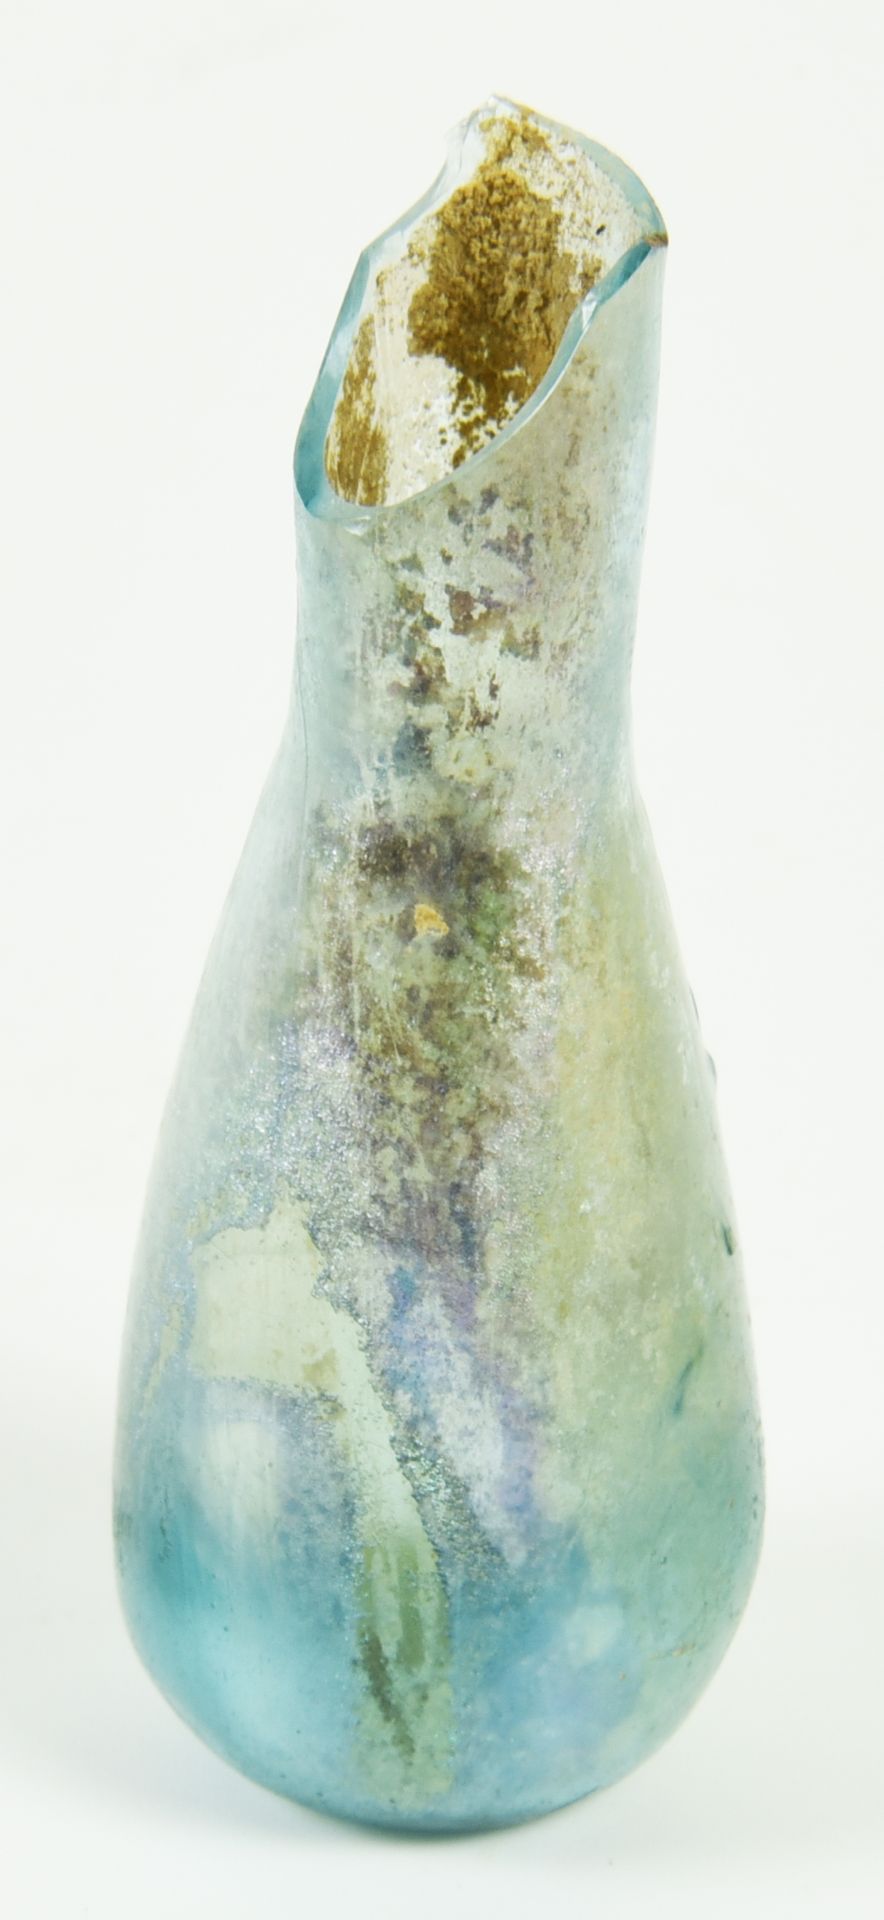 Null 玻璃软膏罐

日期：二至一世纪。C.

材料和技术：蓝色玻璃，吹制。

圆柱形颈部的软膏罐，梨形罐体，凹底

保护状况：颈部有缺口

产品：罗马文化
&hellip;